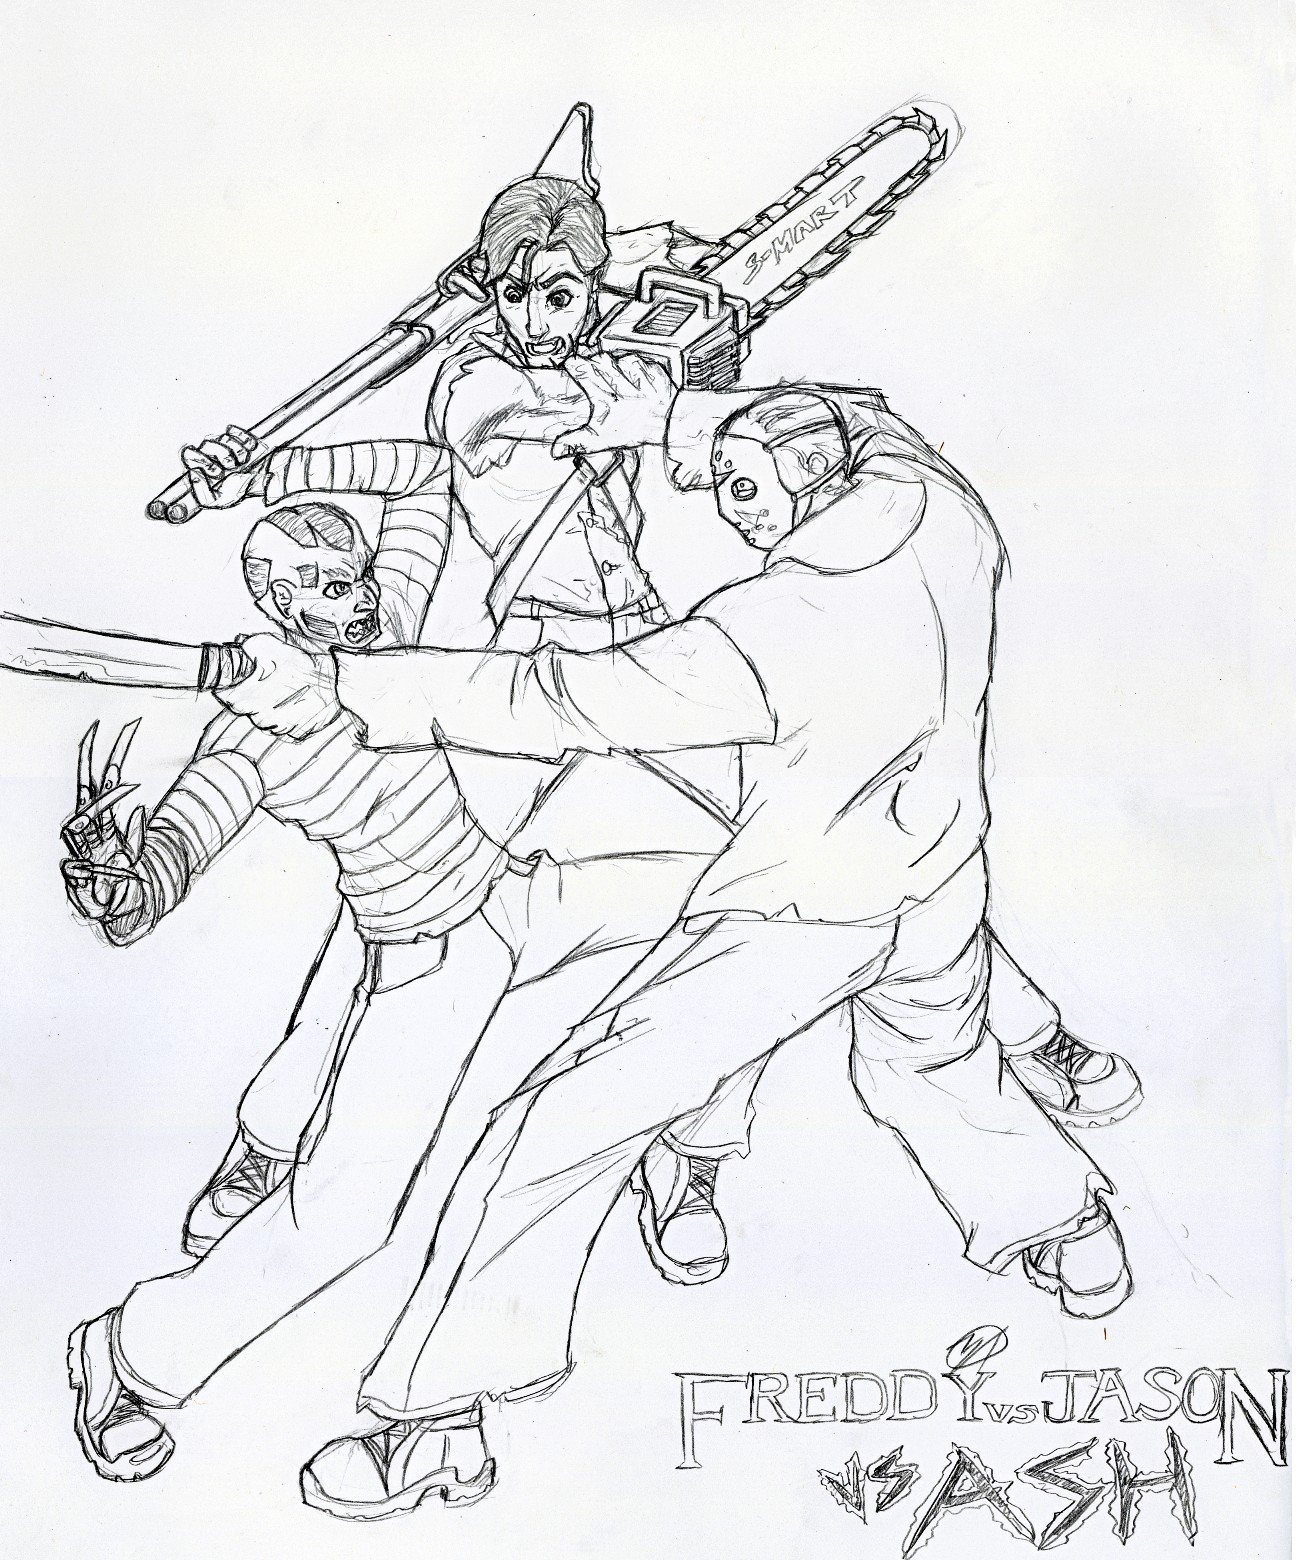 Coloring Pages For Boys Freedy Kruger
 Freddy vs Jason vs Ash by zakukun on DeviantArt